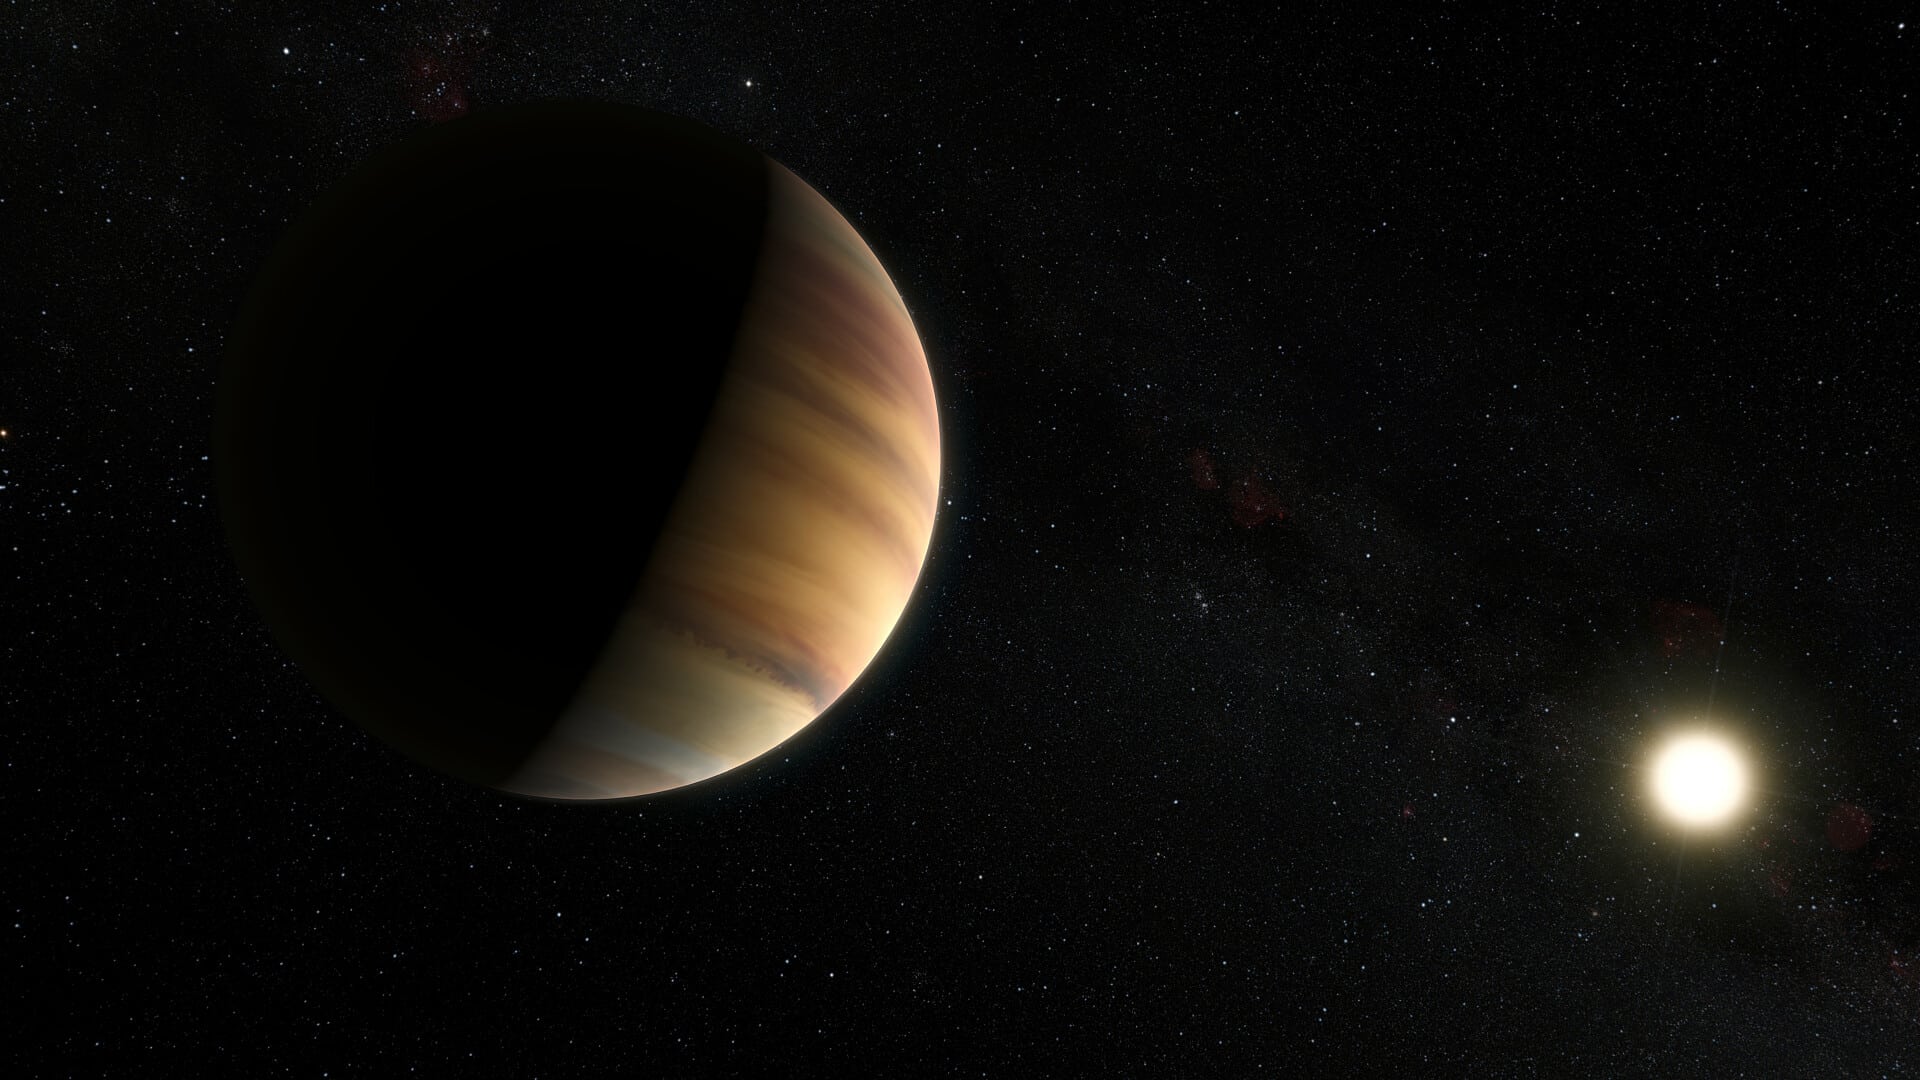 Alpha Centauri: An Image of a Planet